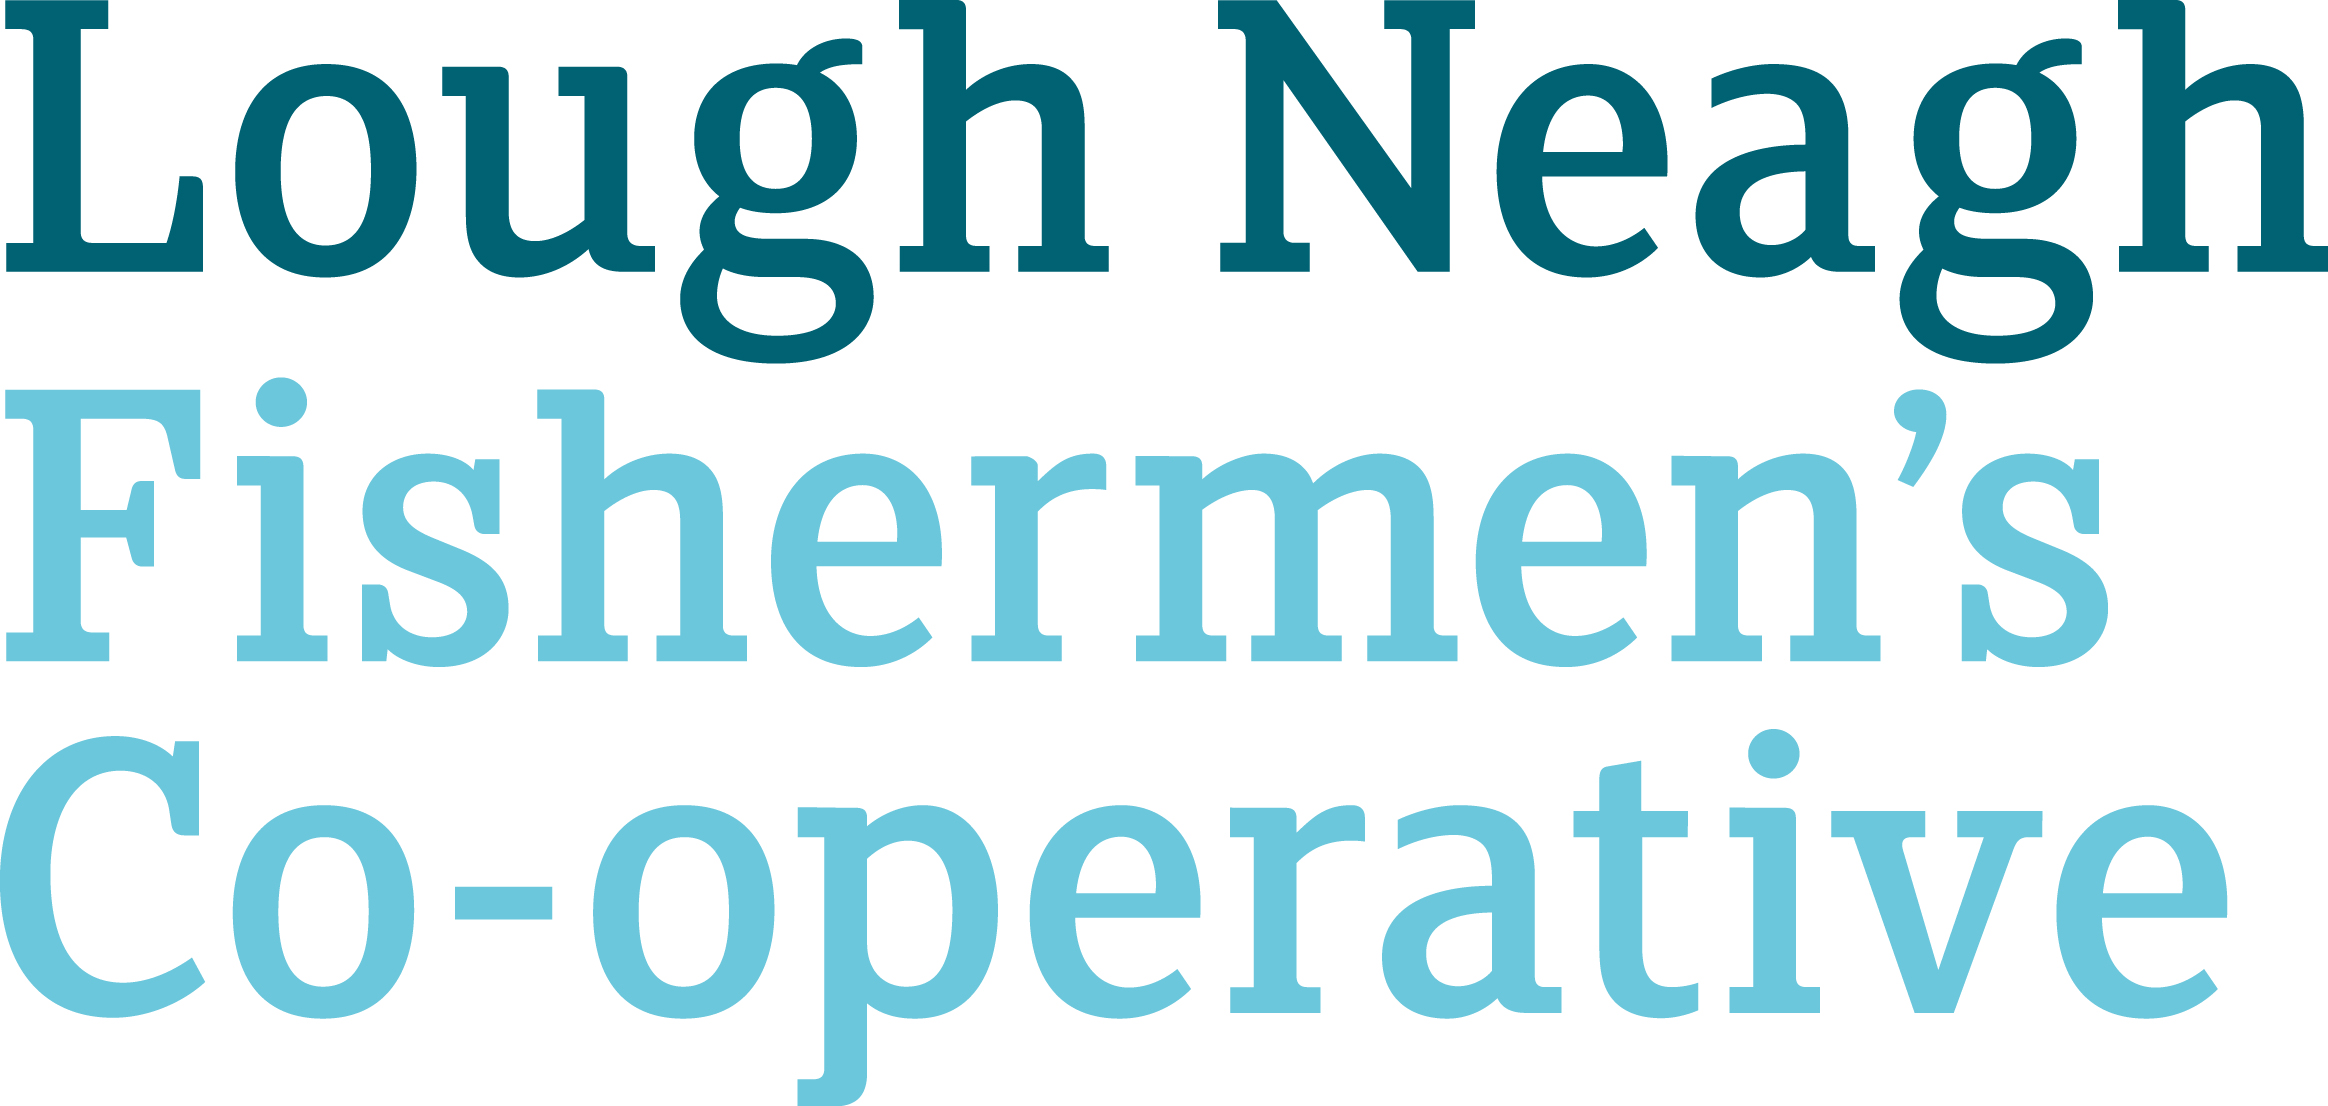 Lough Neagh Fishermen's Co-Operative